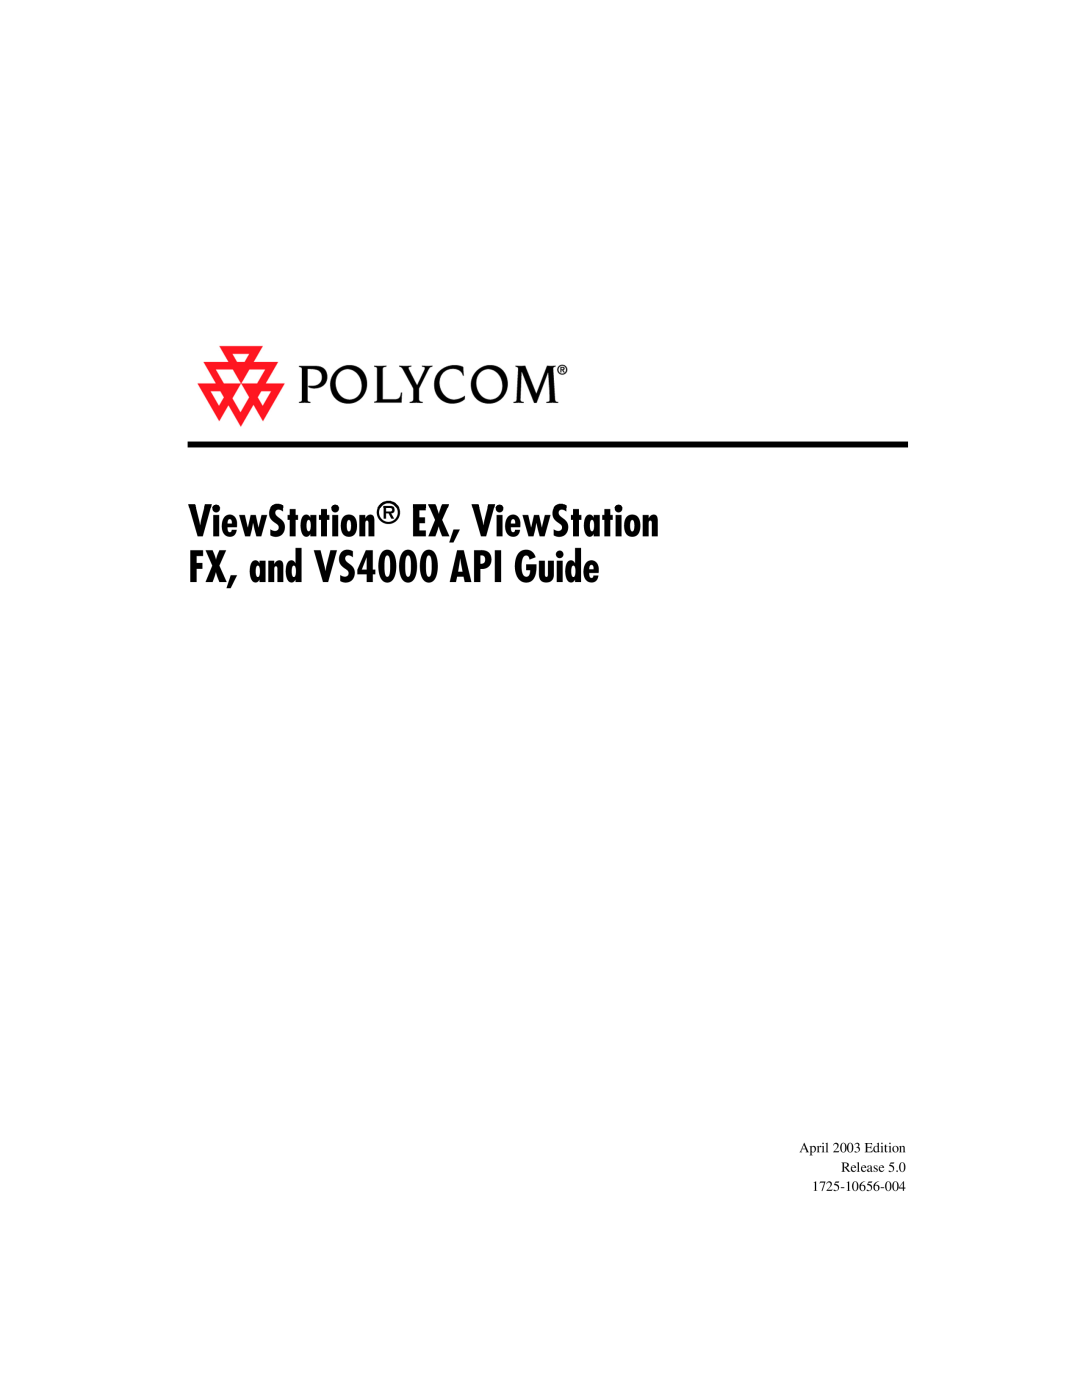 Polycom VIEWSTATION EX manual Quick Tips, for ViewStation EX, ViewStation FX, and VS4000, Using the Remote Control 